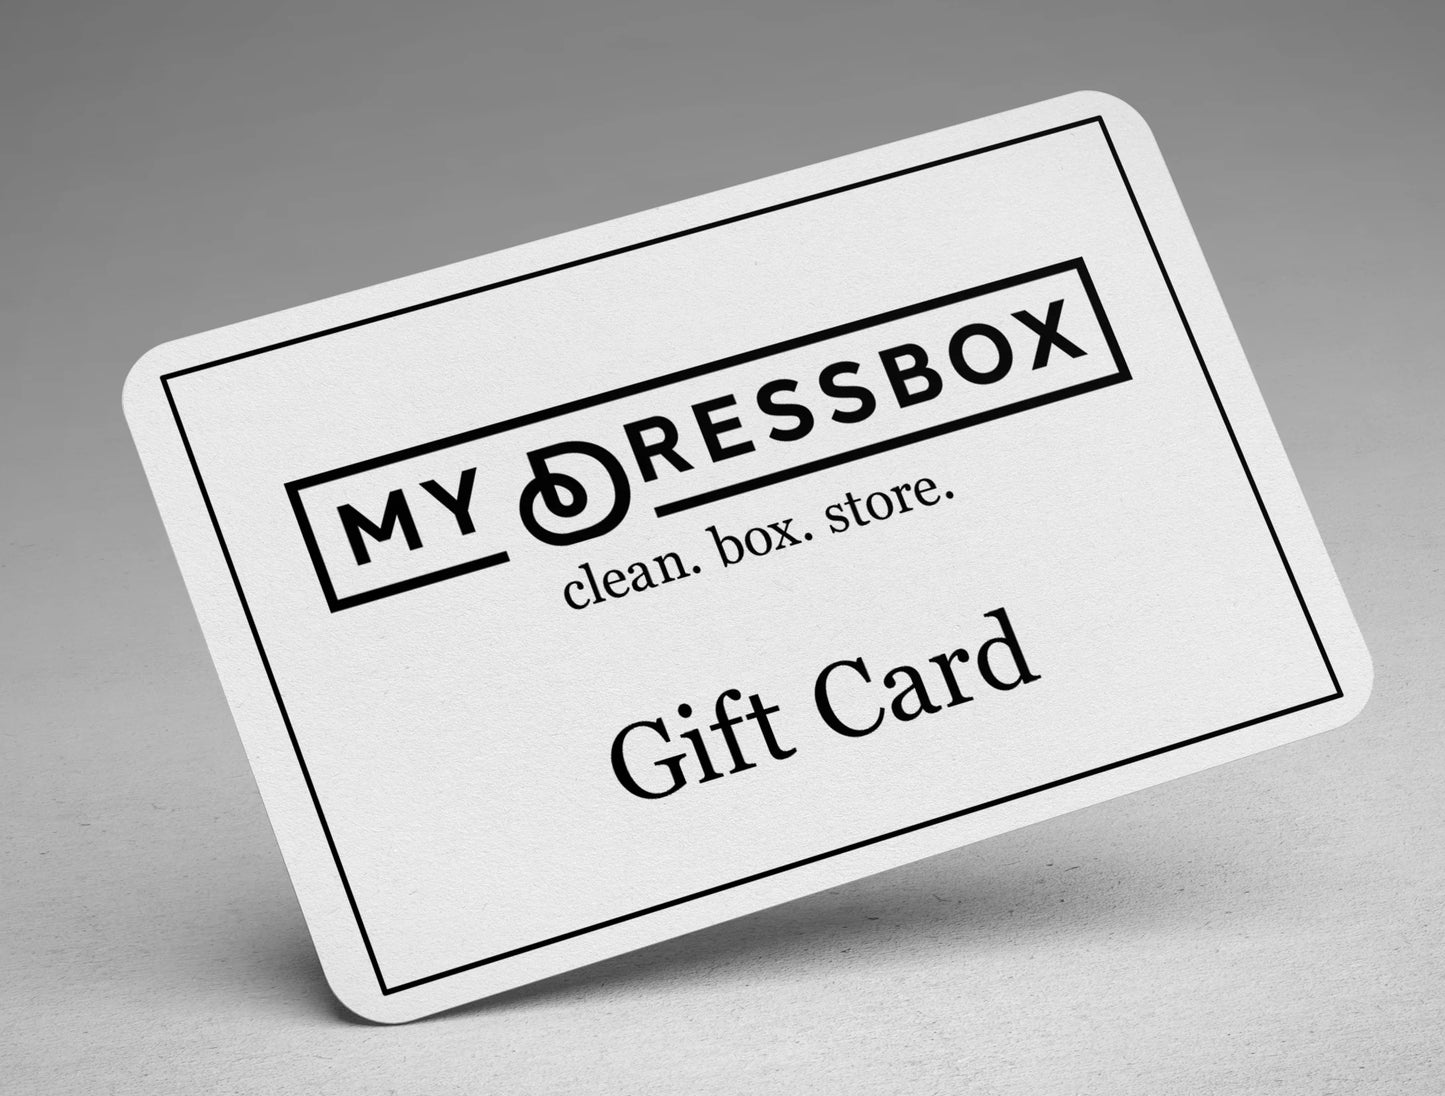 MyDressbox Gift Card